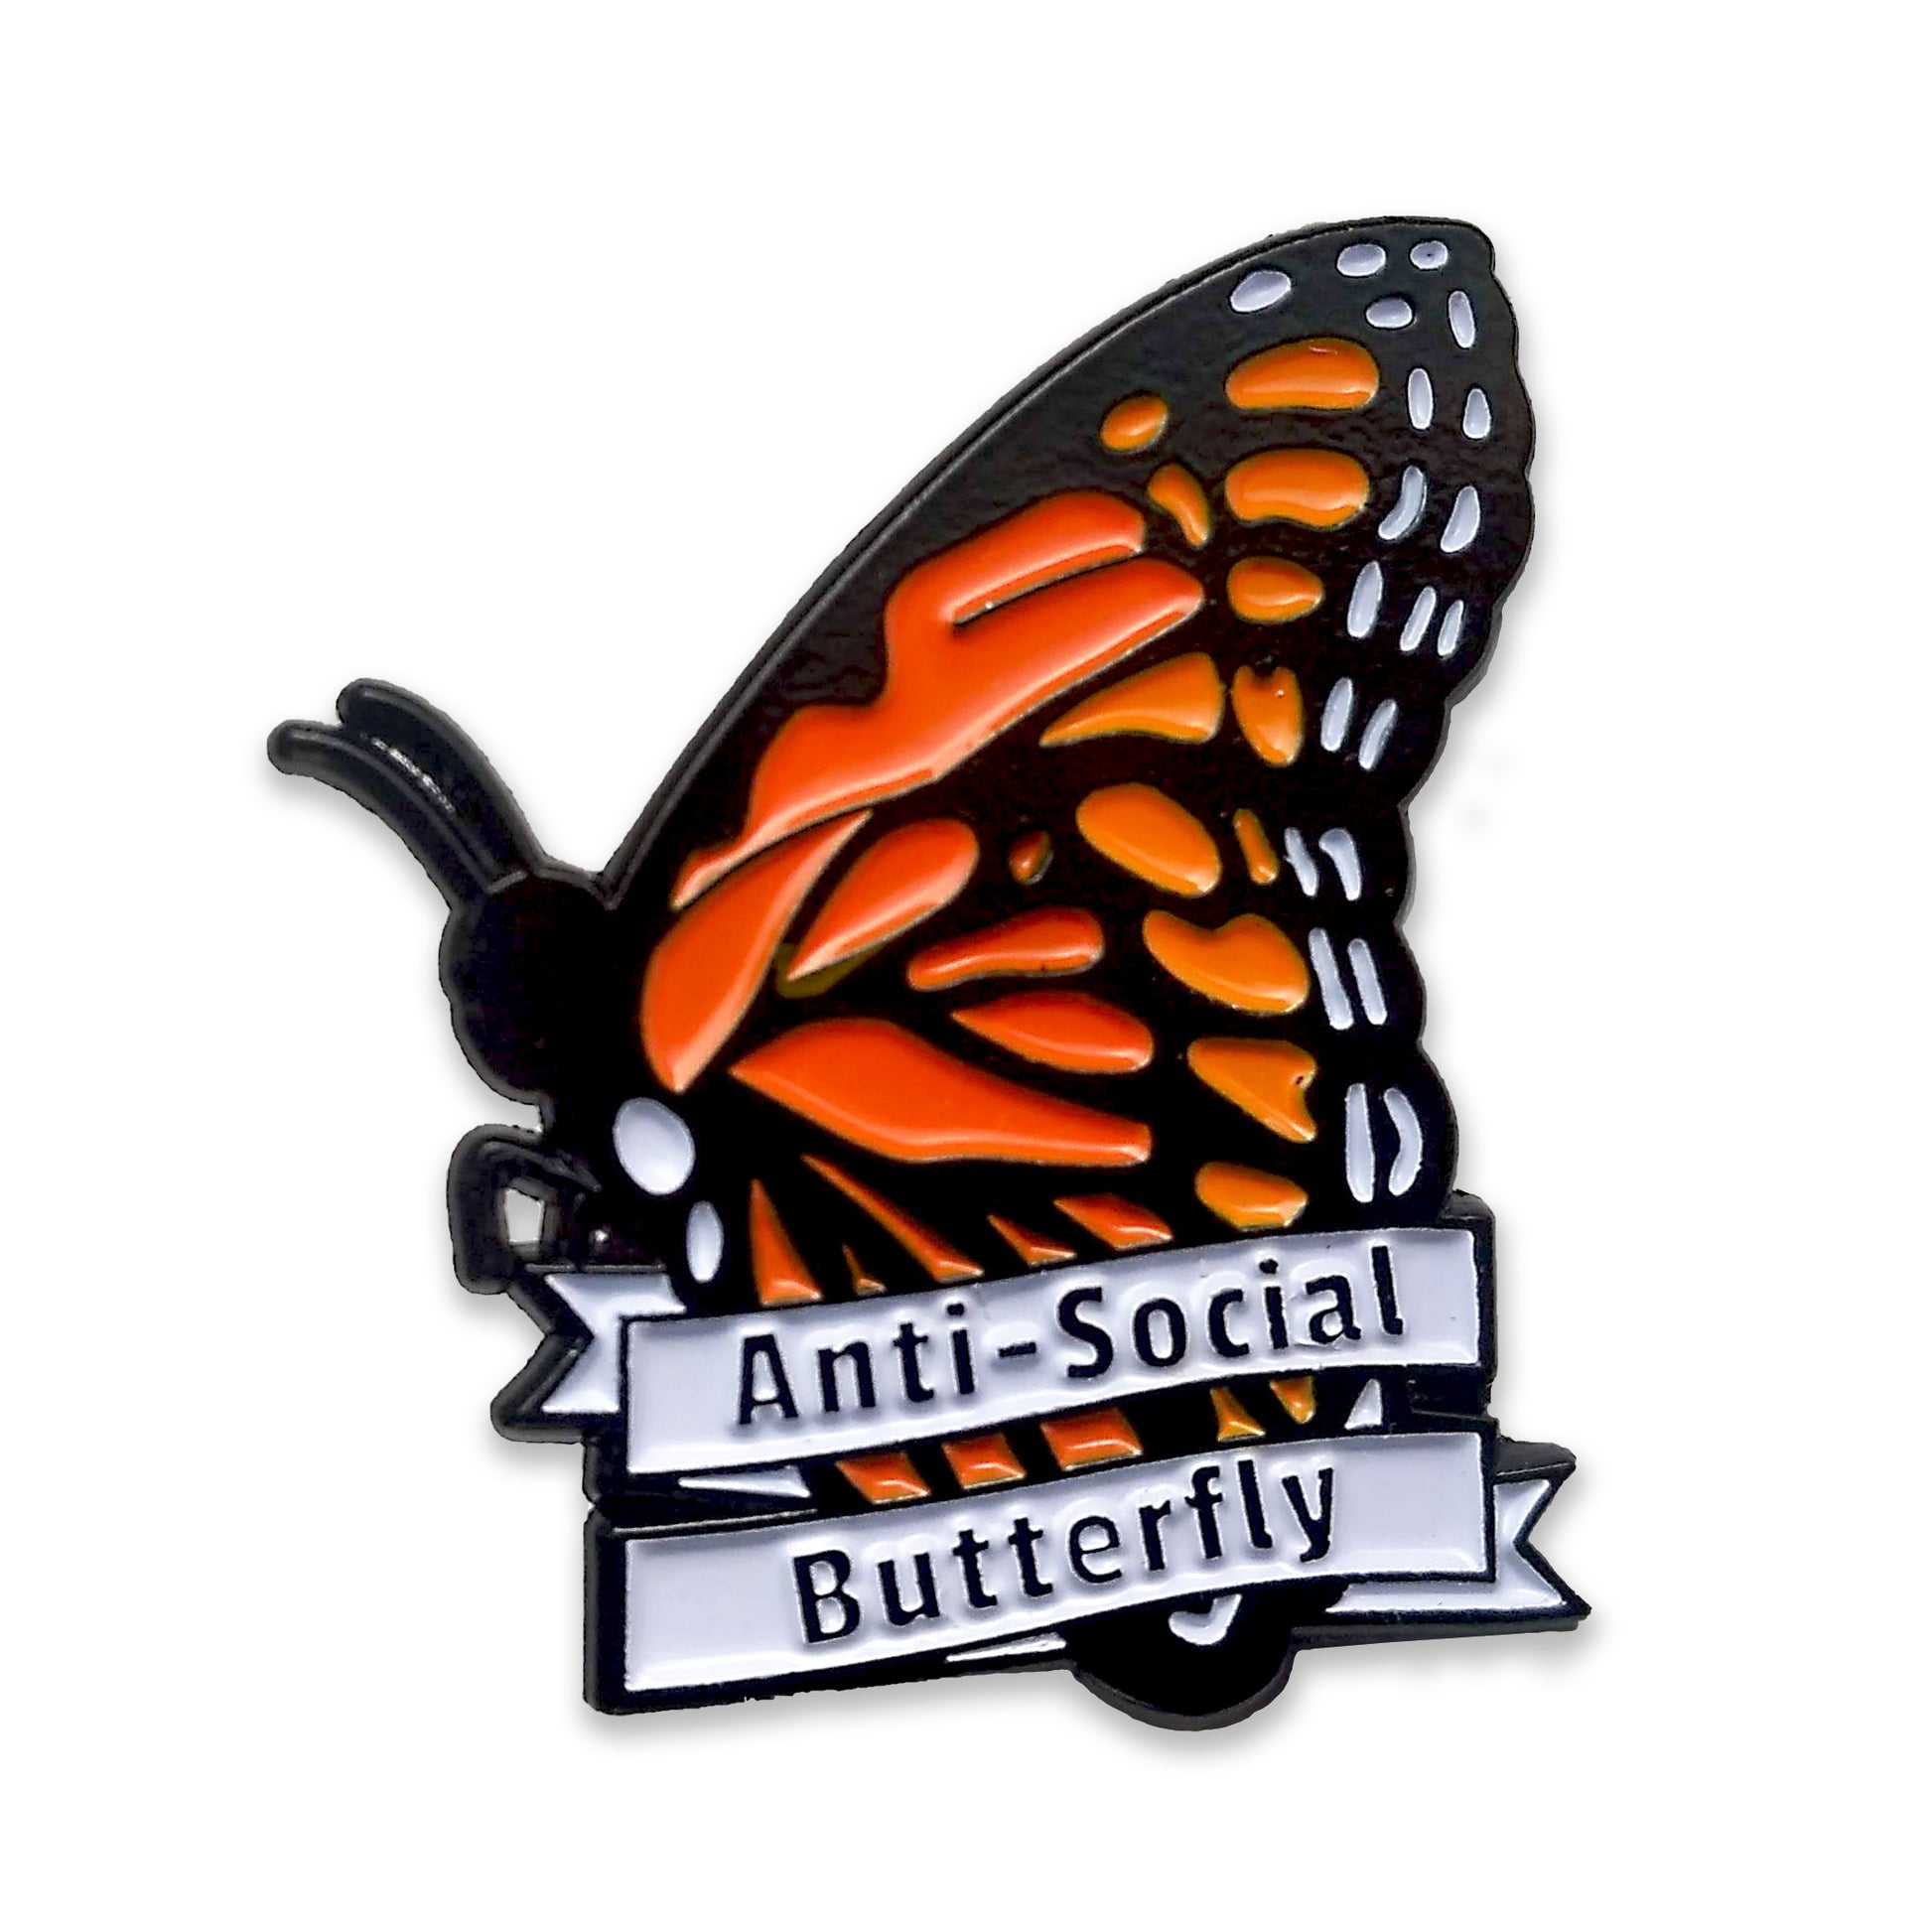 Enamel Pin says "Anti-Social Butterfly"